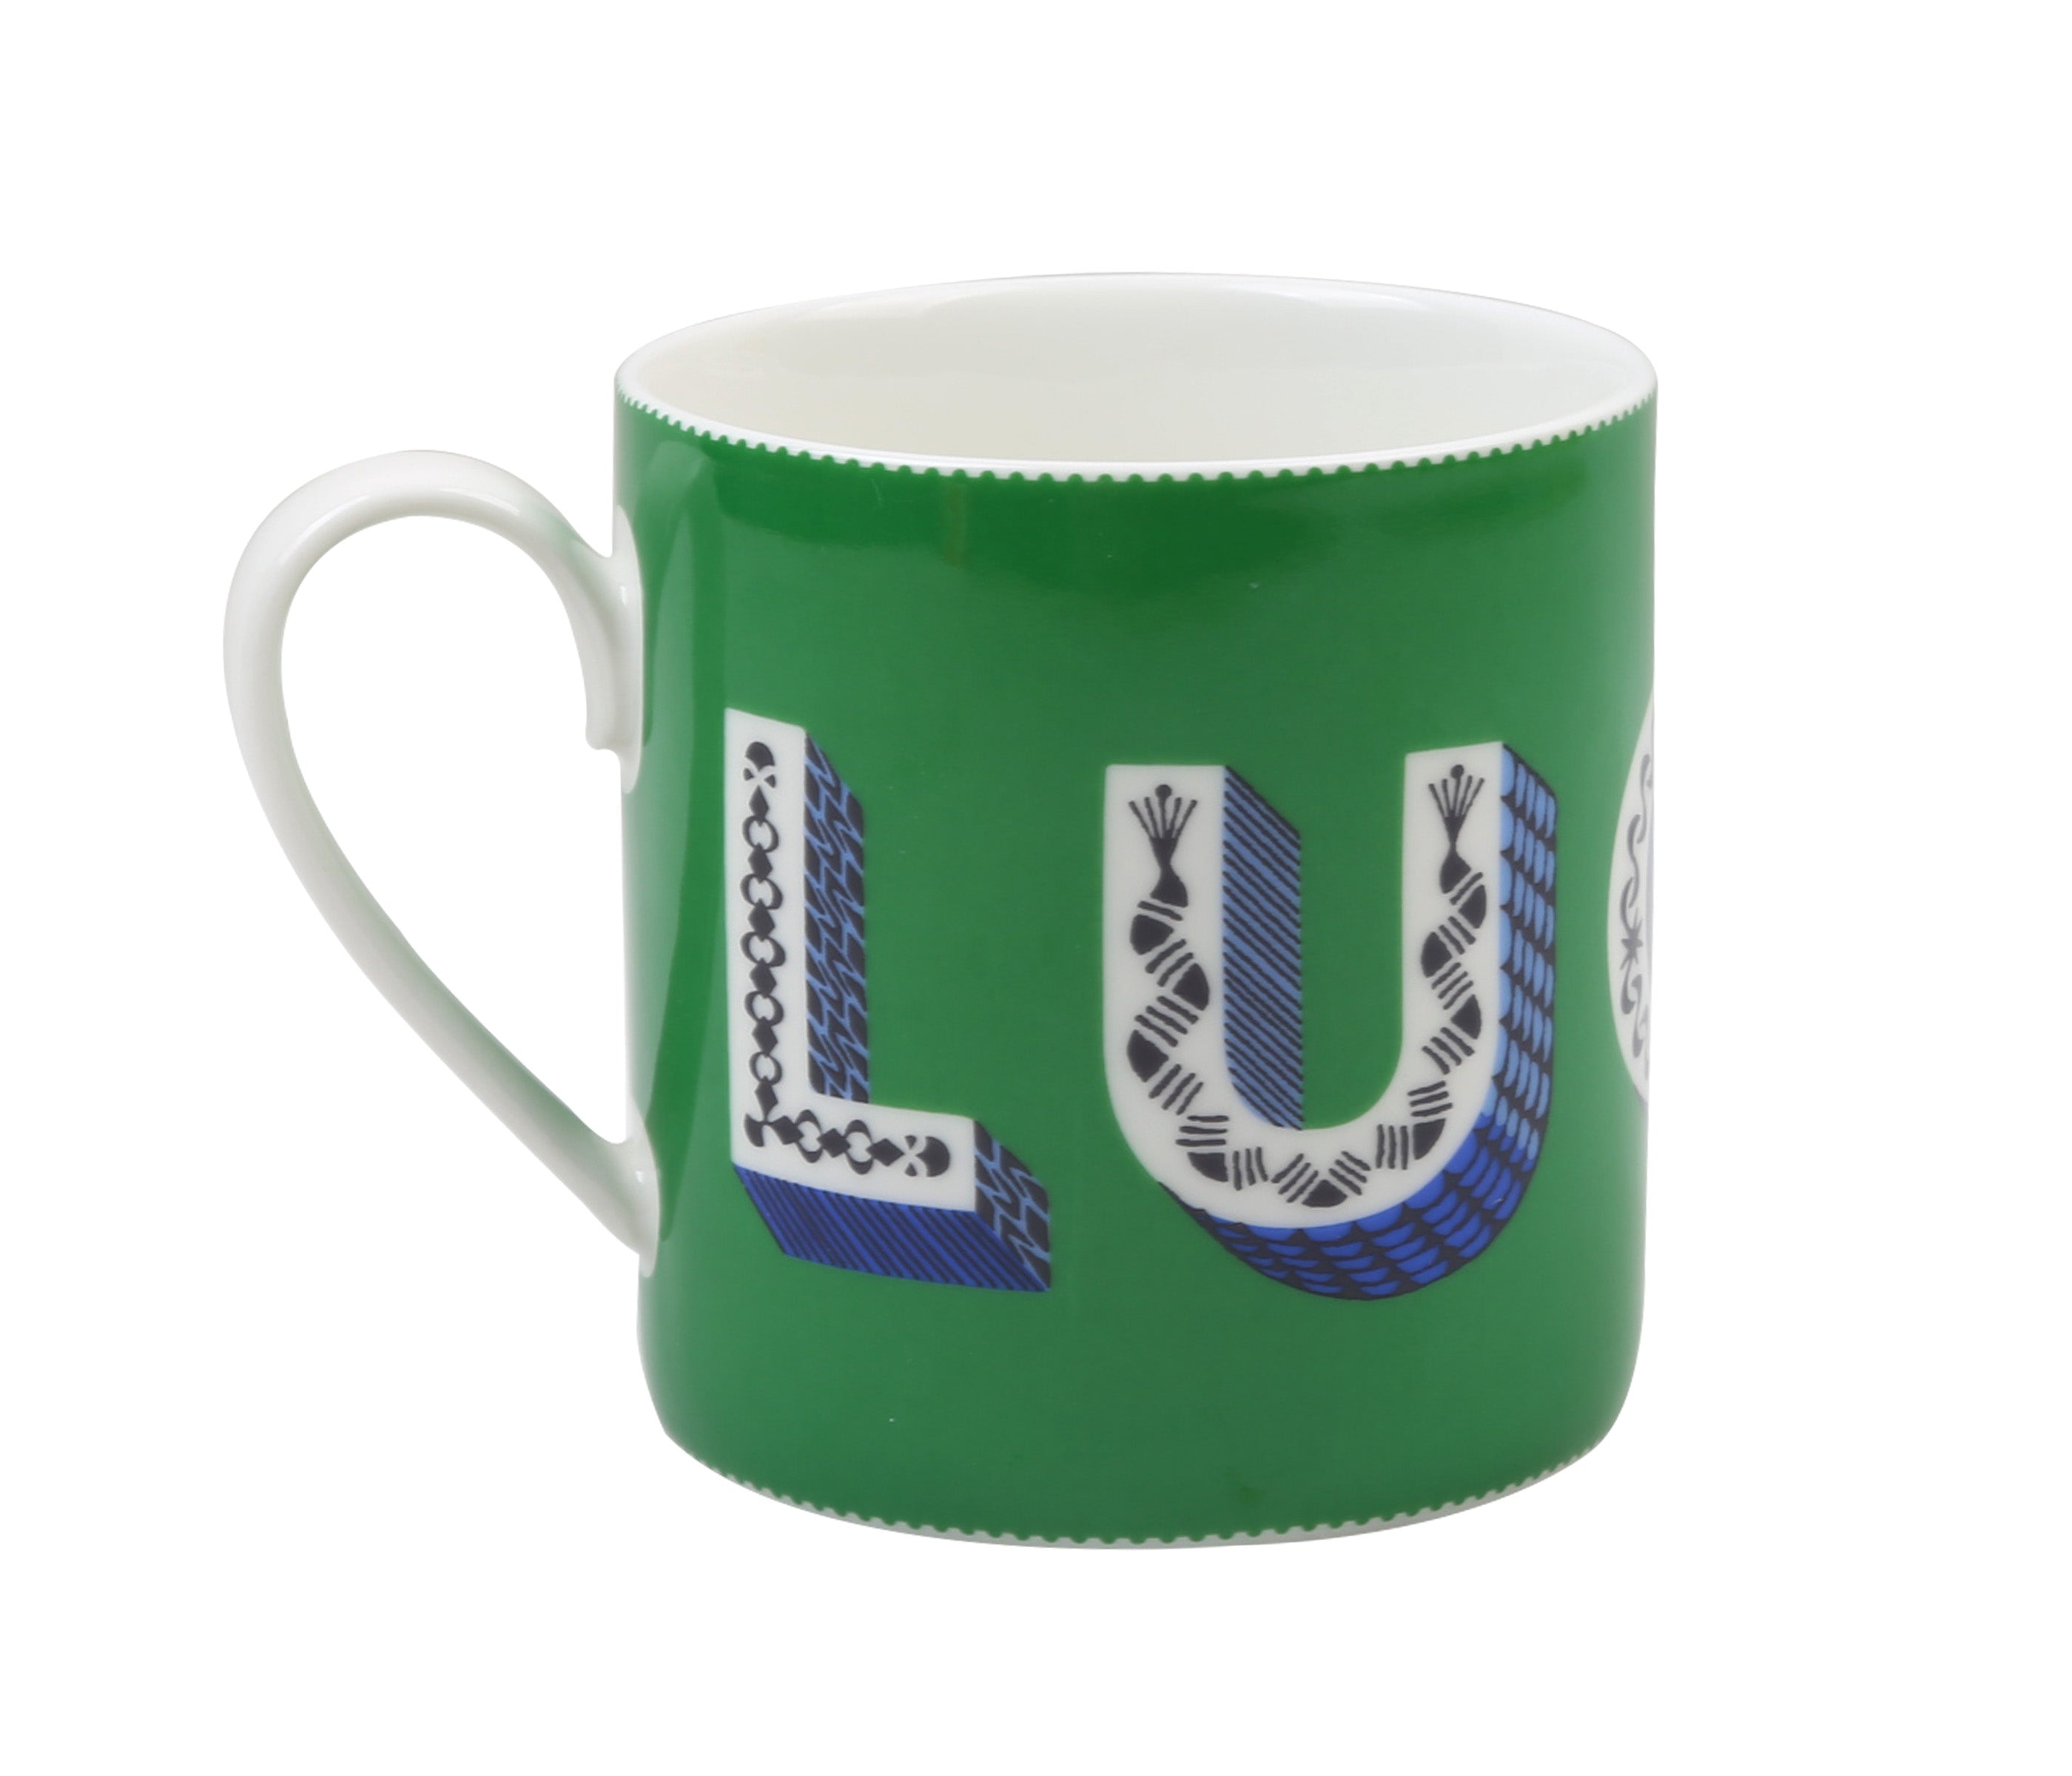 Word Porcelain Mug - Lucky - by Jamida